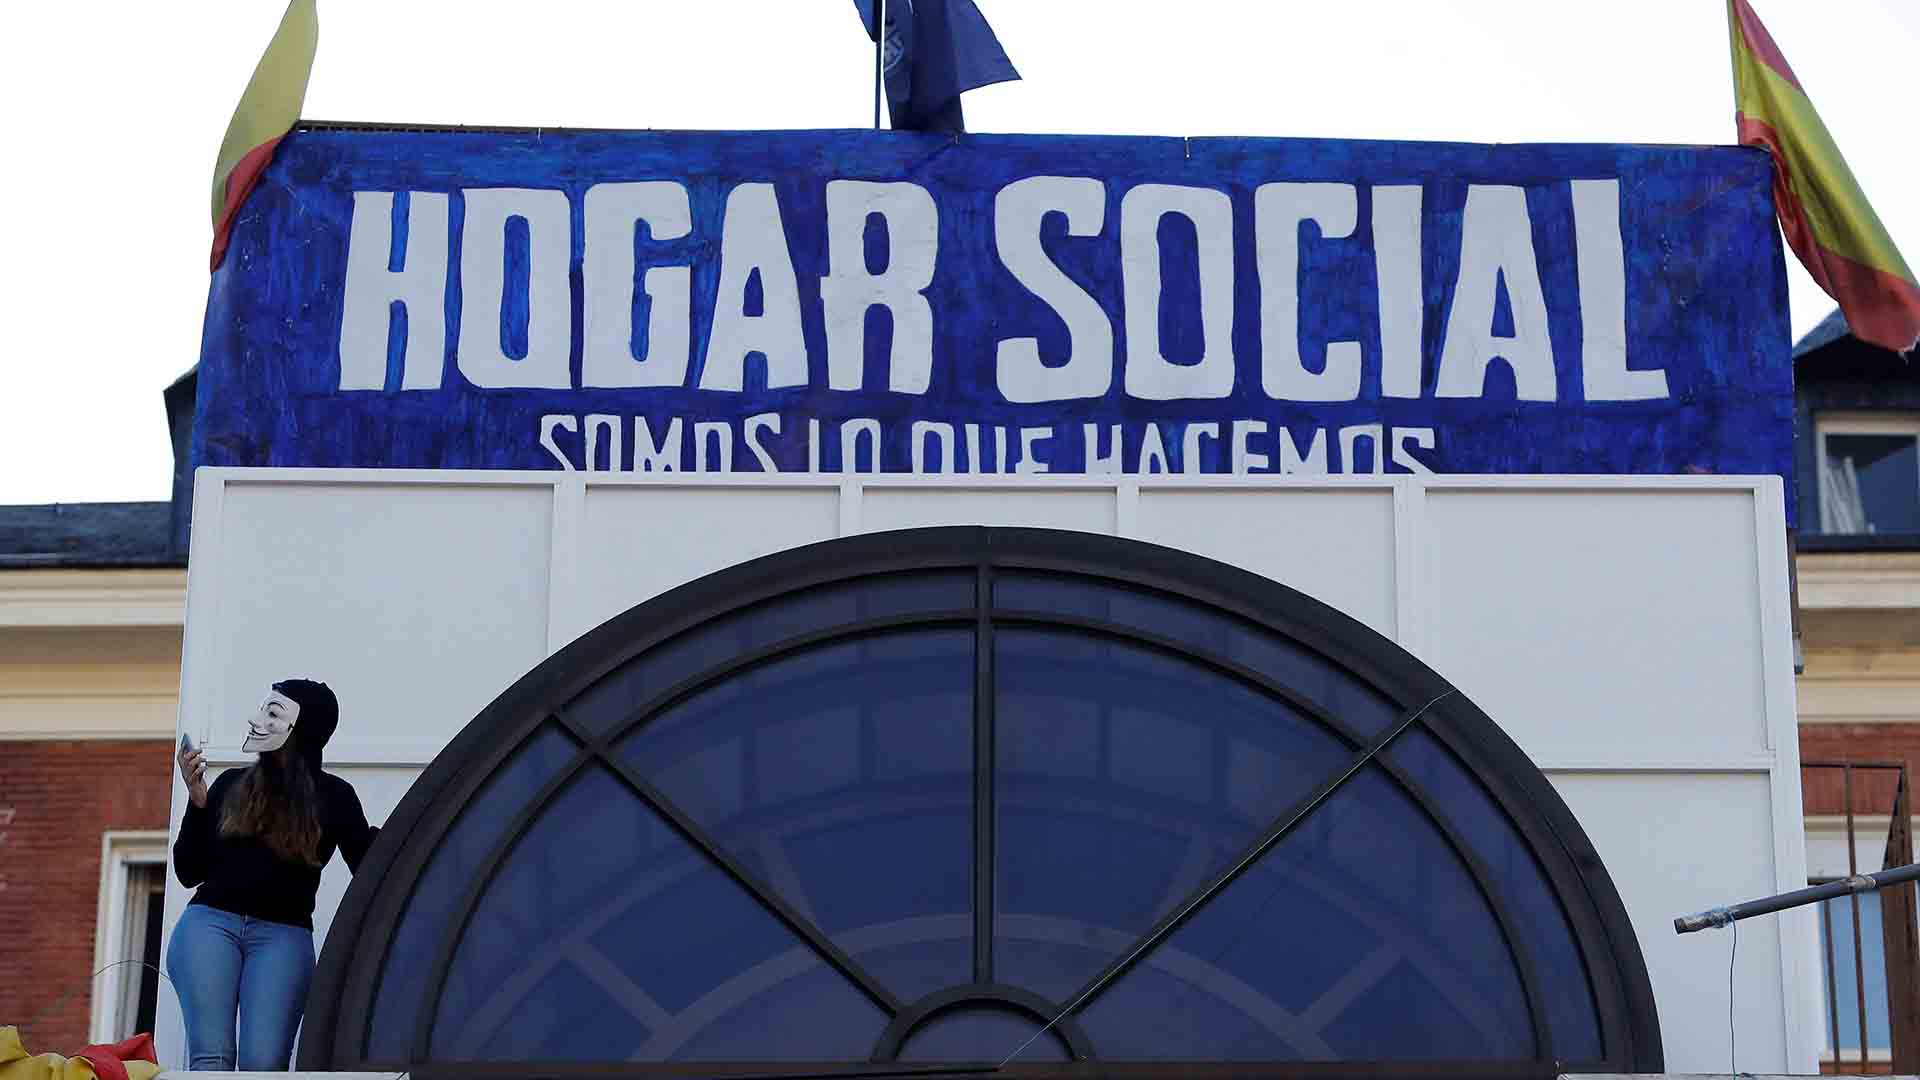 Procesada la líder de Hogar Social Madrid por islamofobia